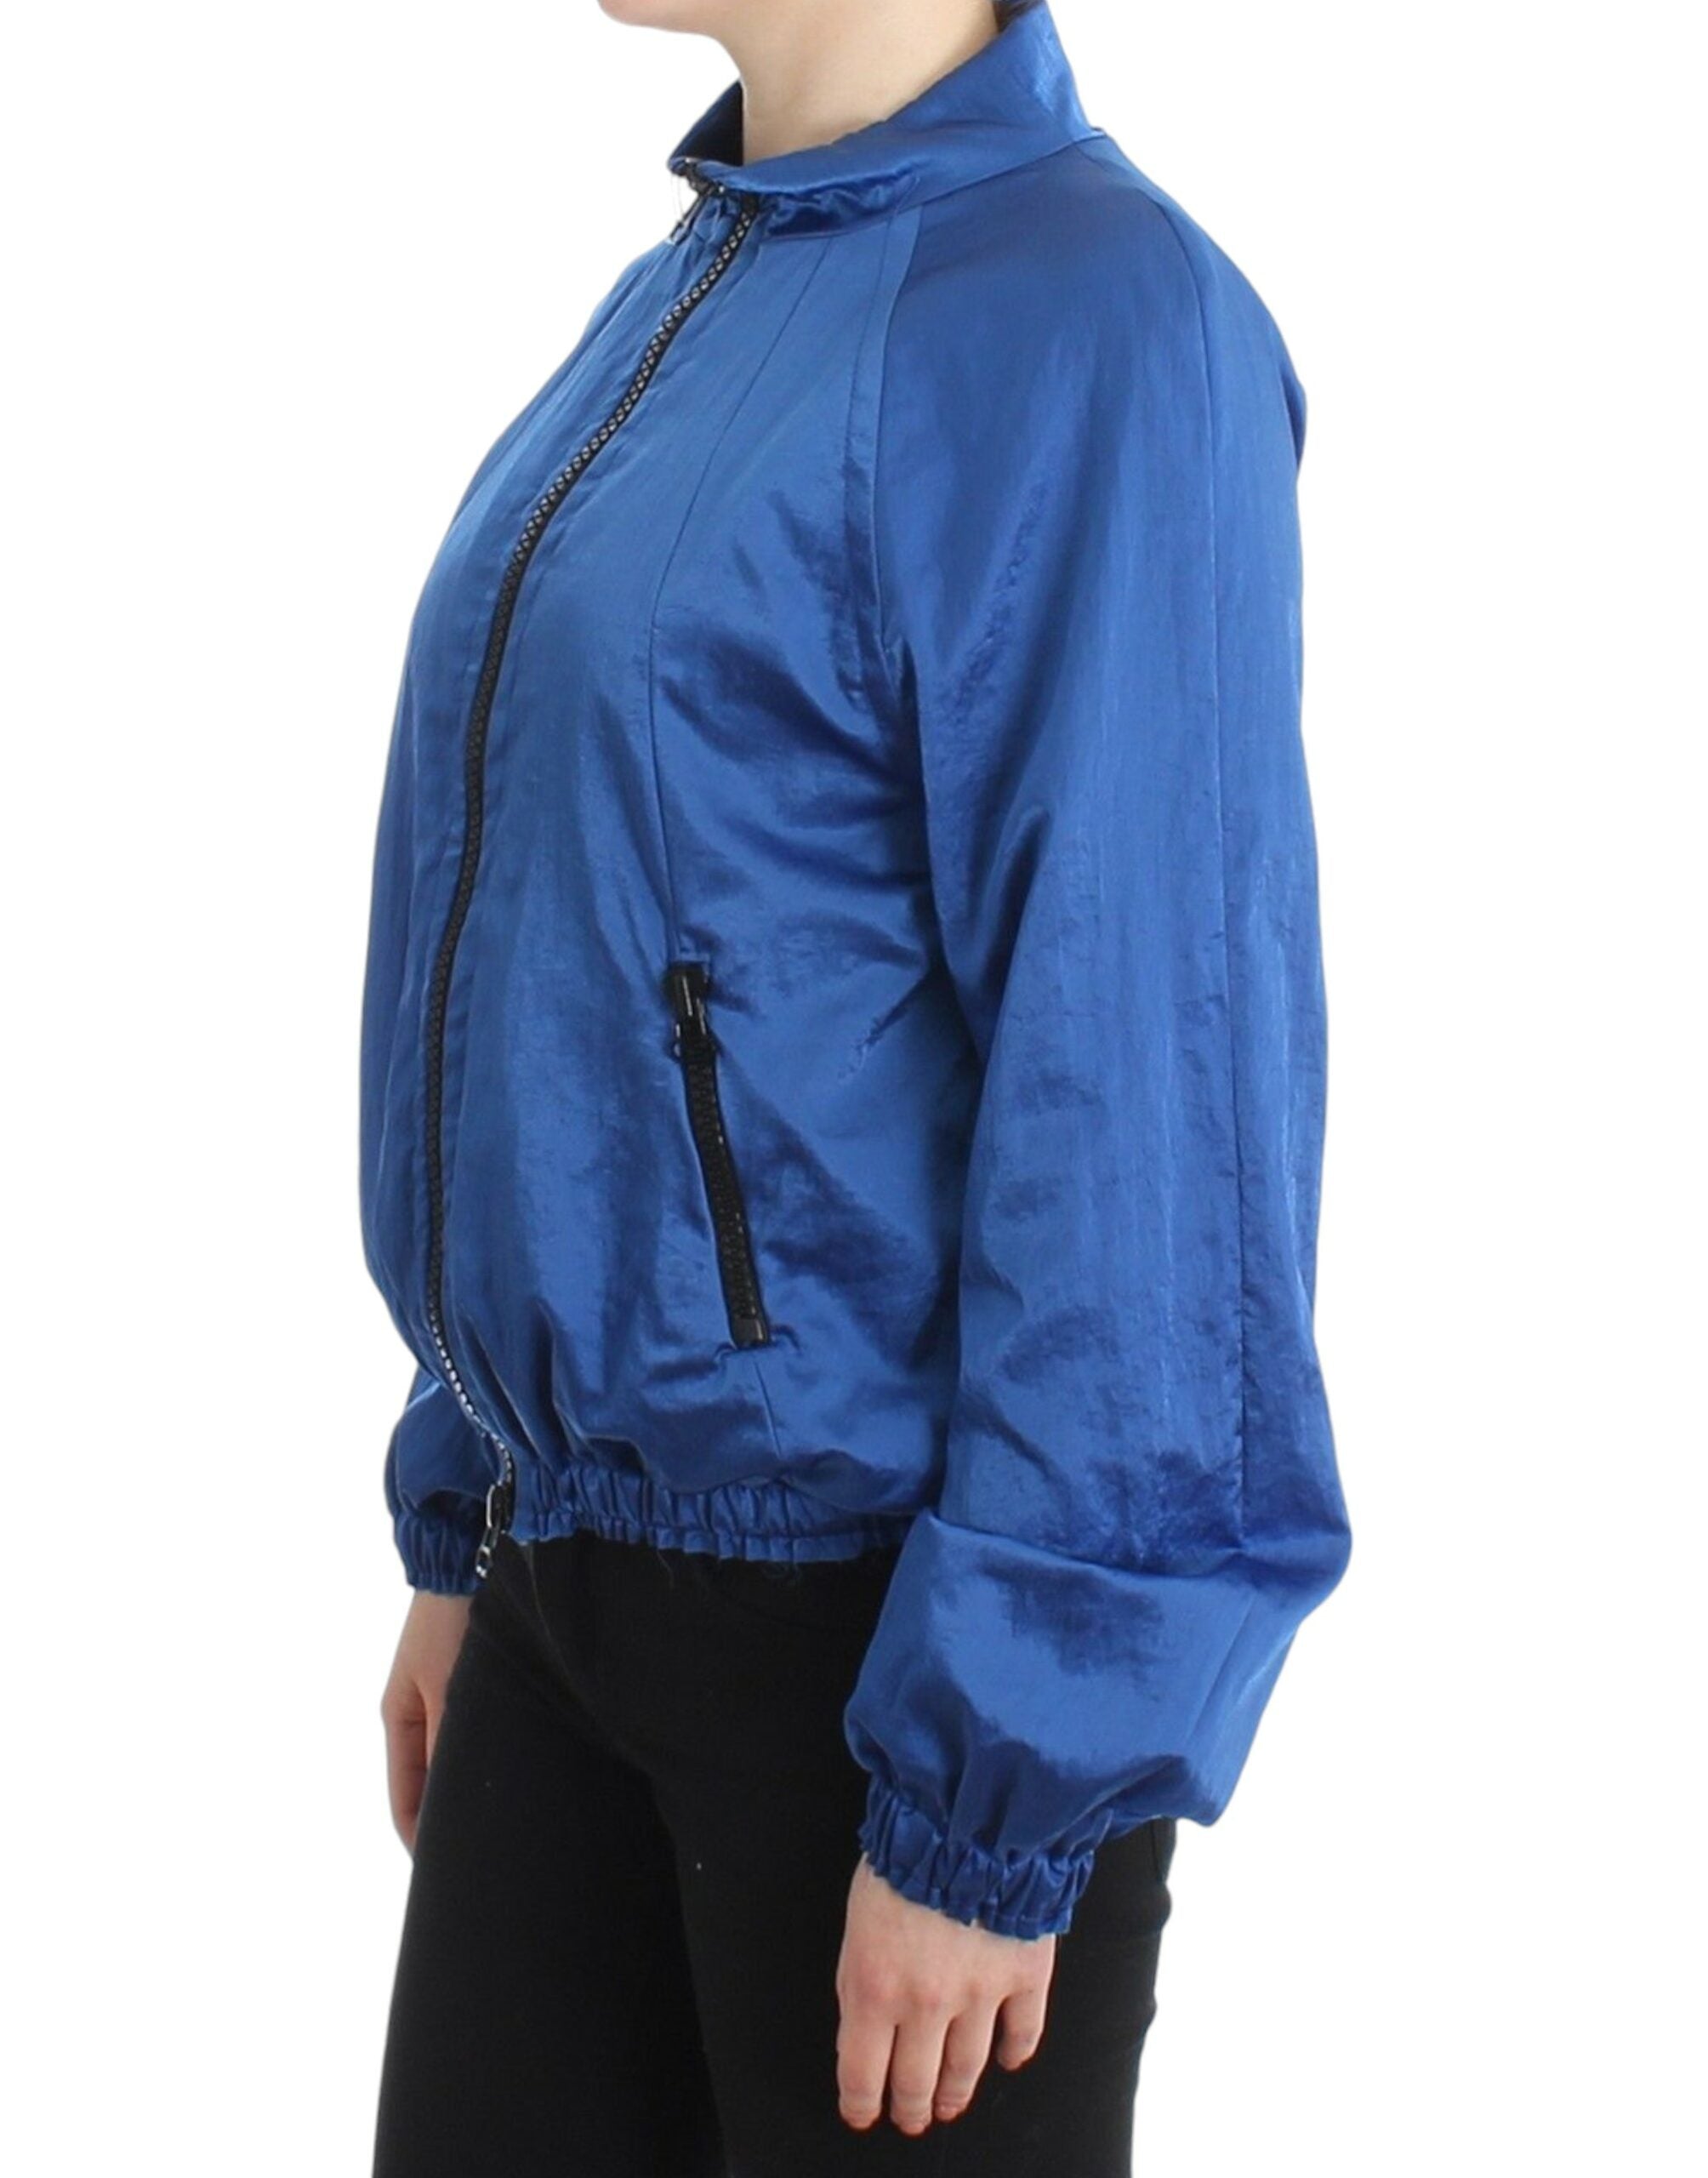 Chic Blue Bomber Jacket for Elegant Outings